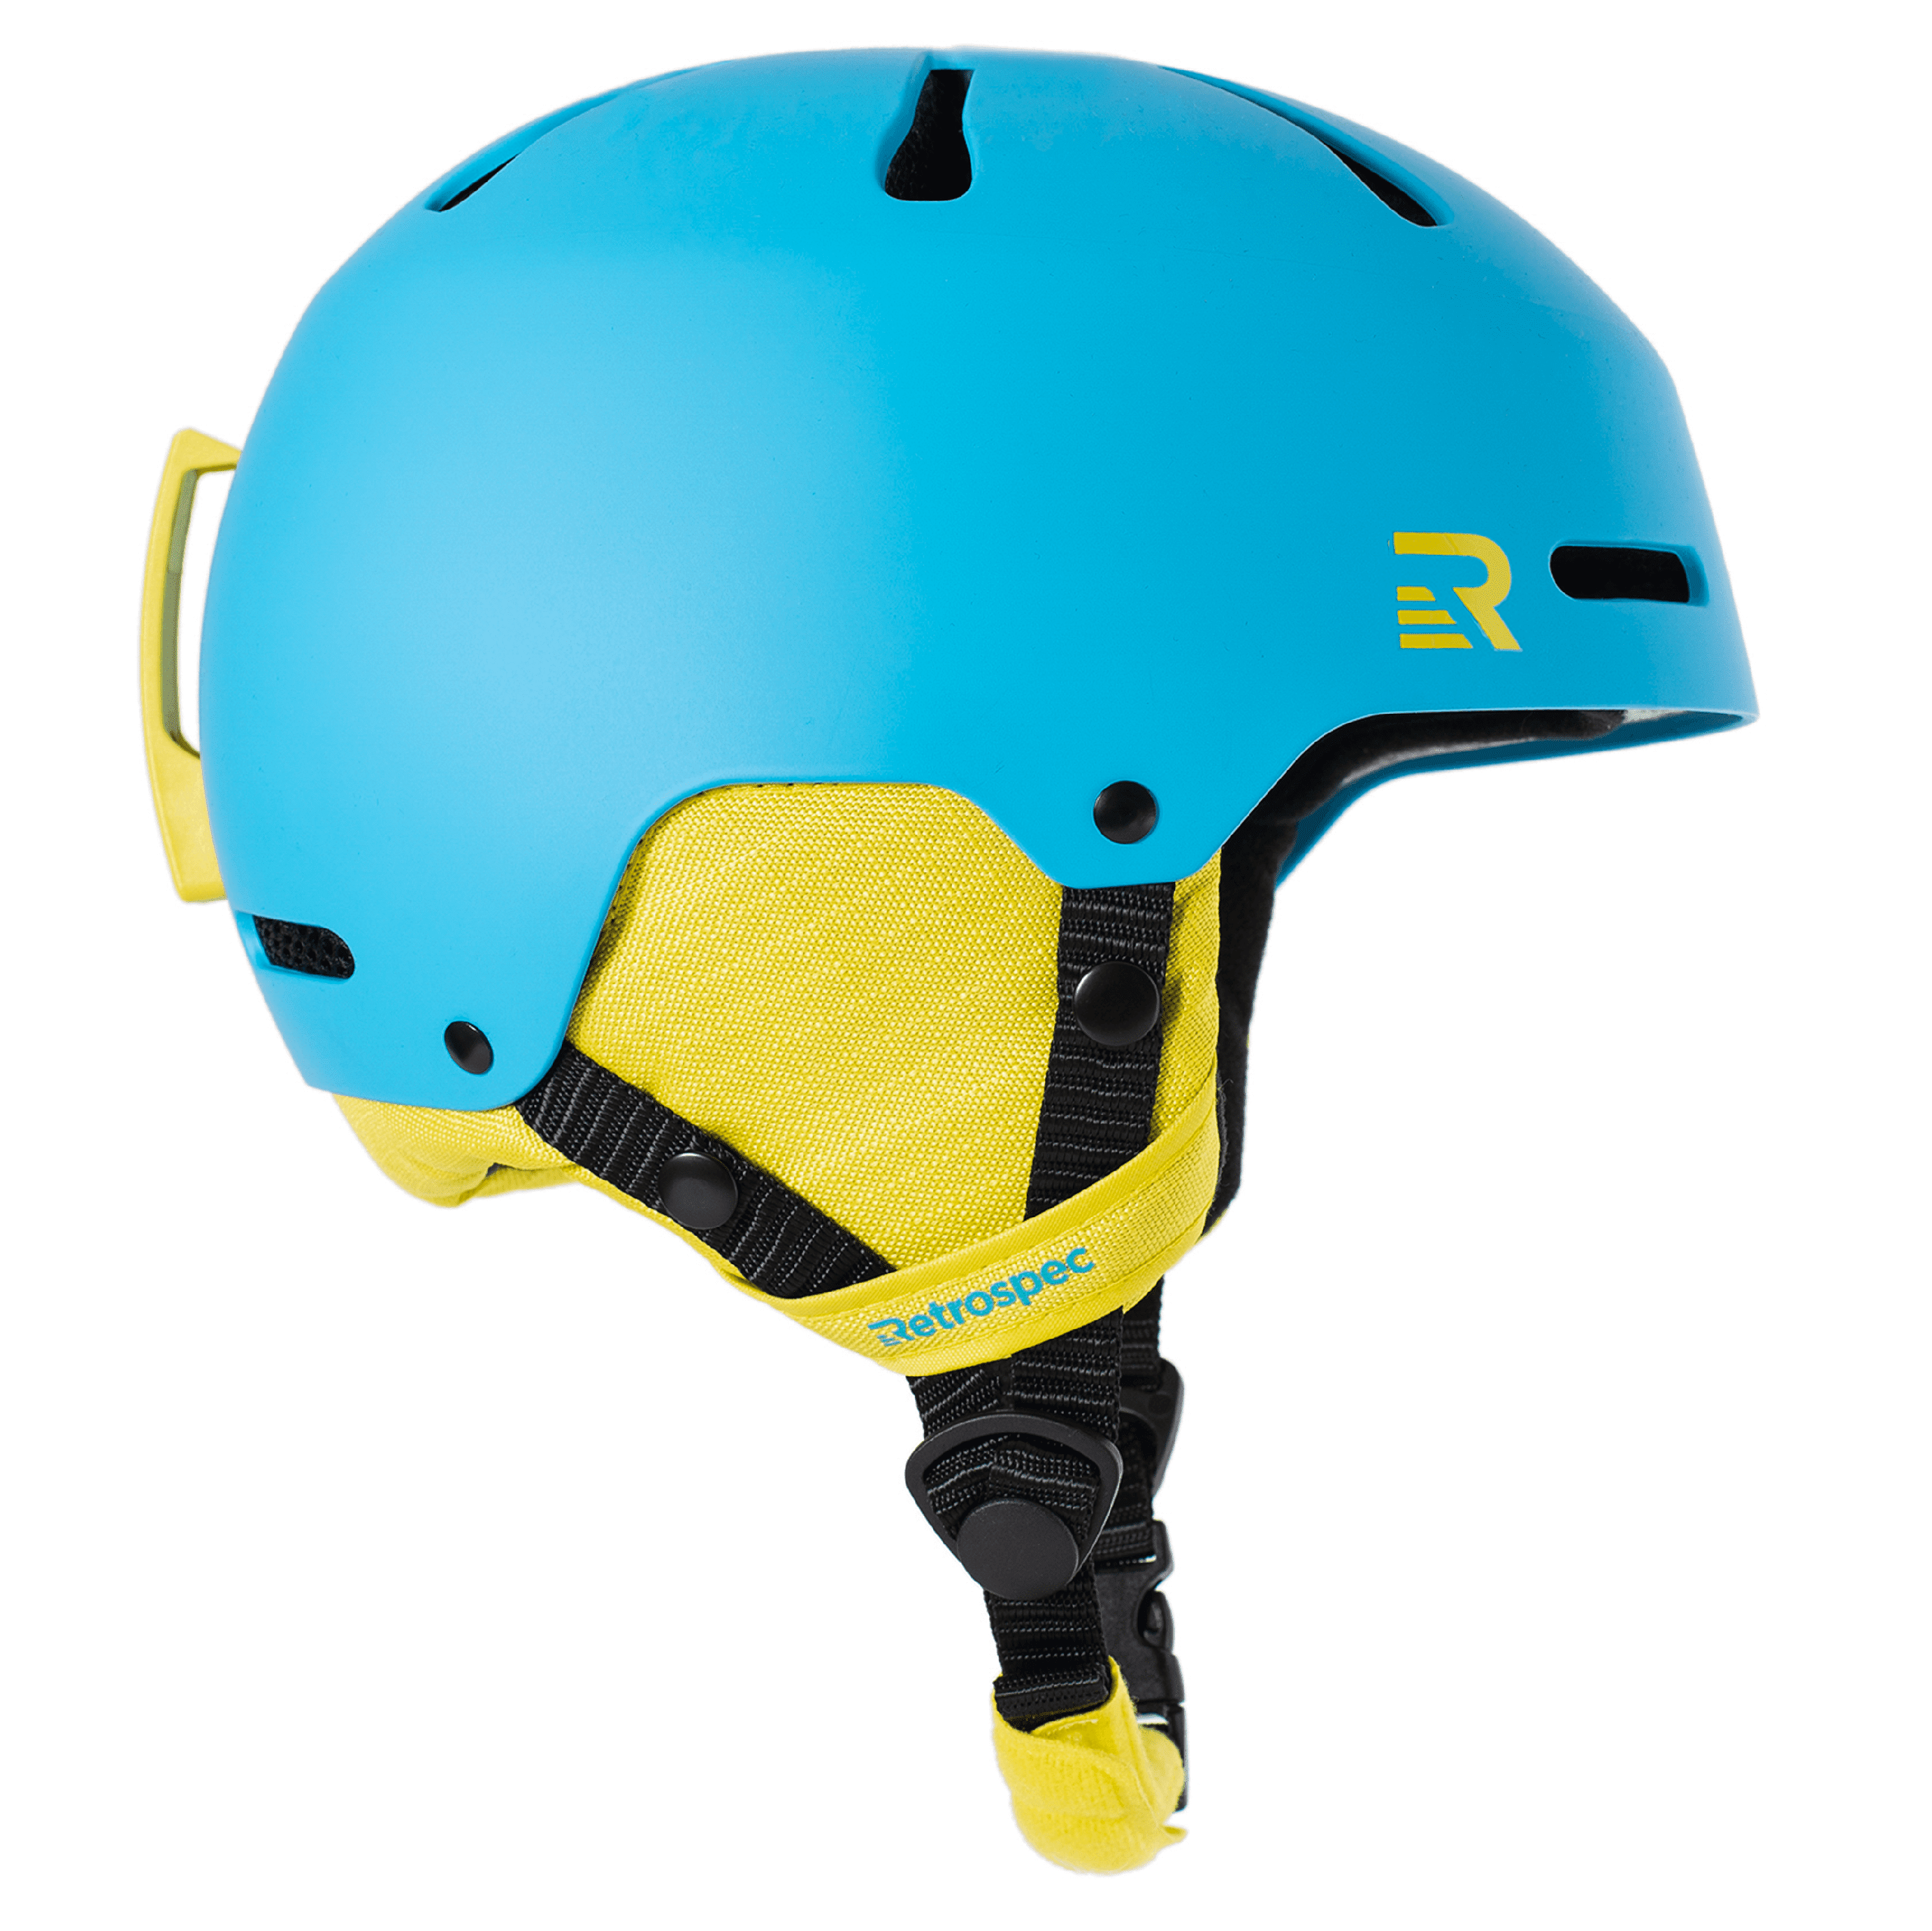 Retrospec Traverse H3 Youth Ski & Snowboard Helmet 